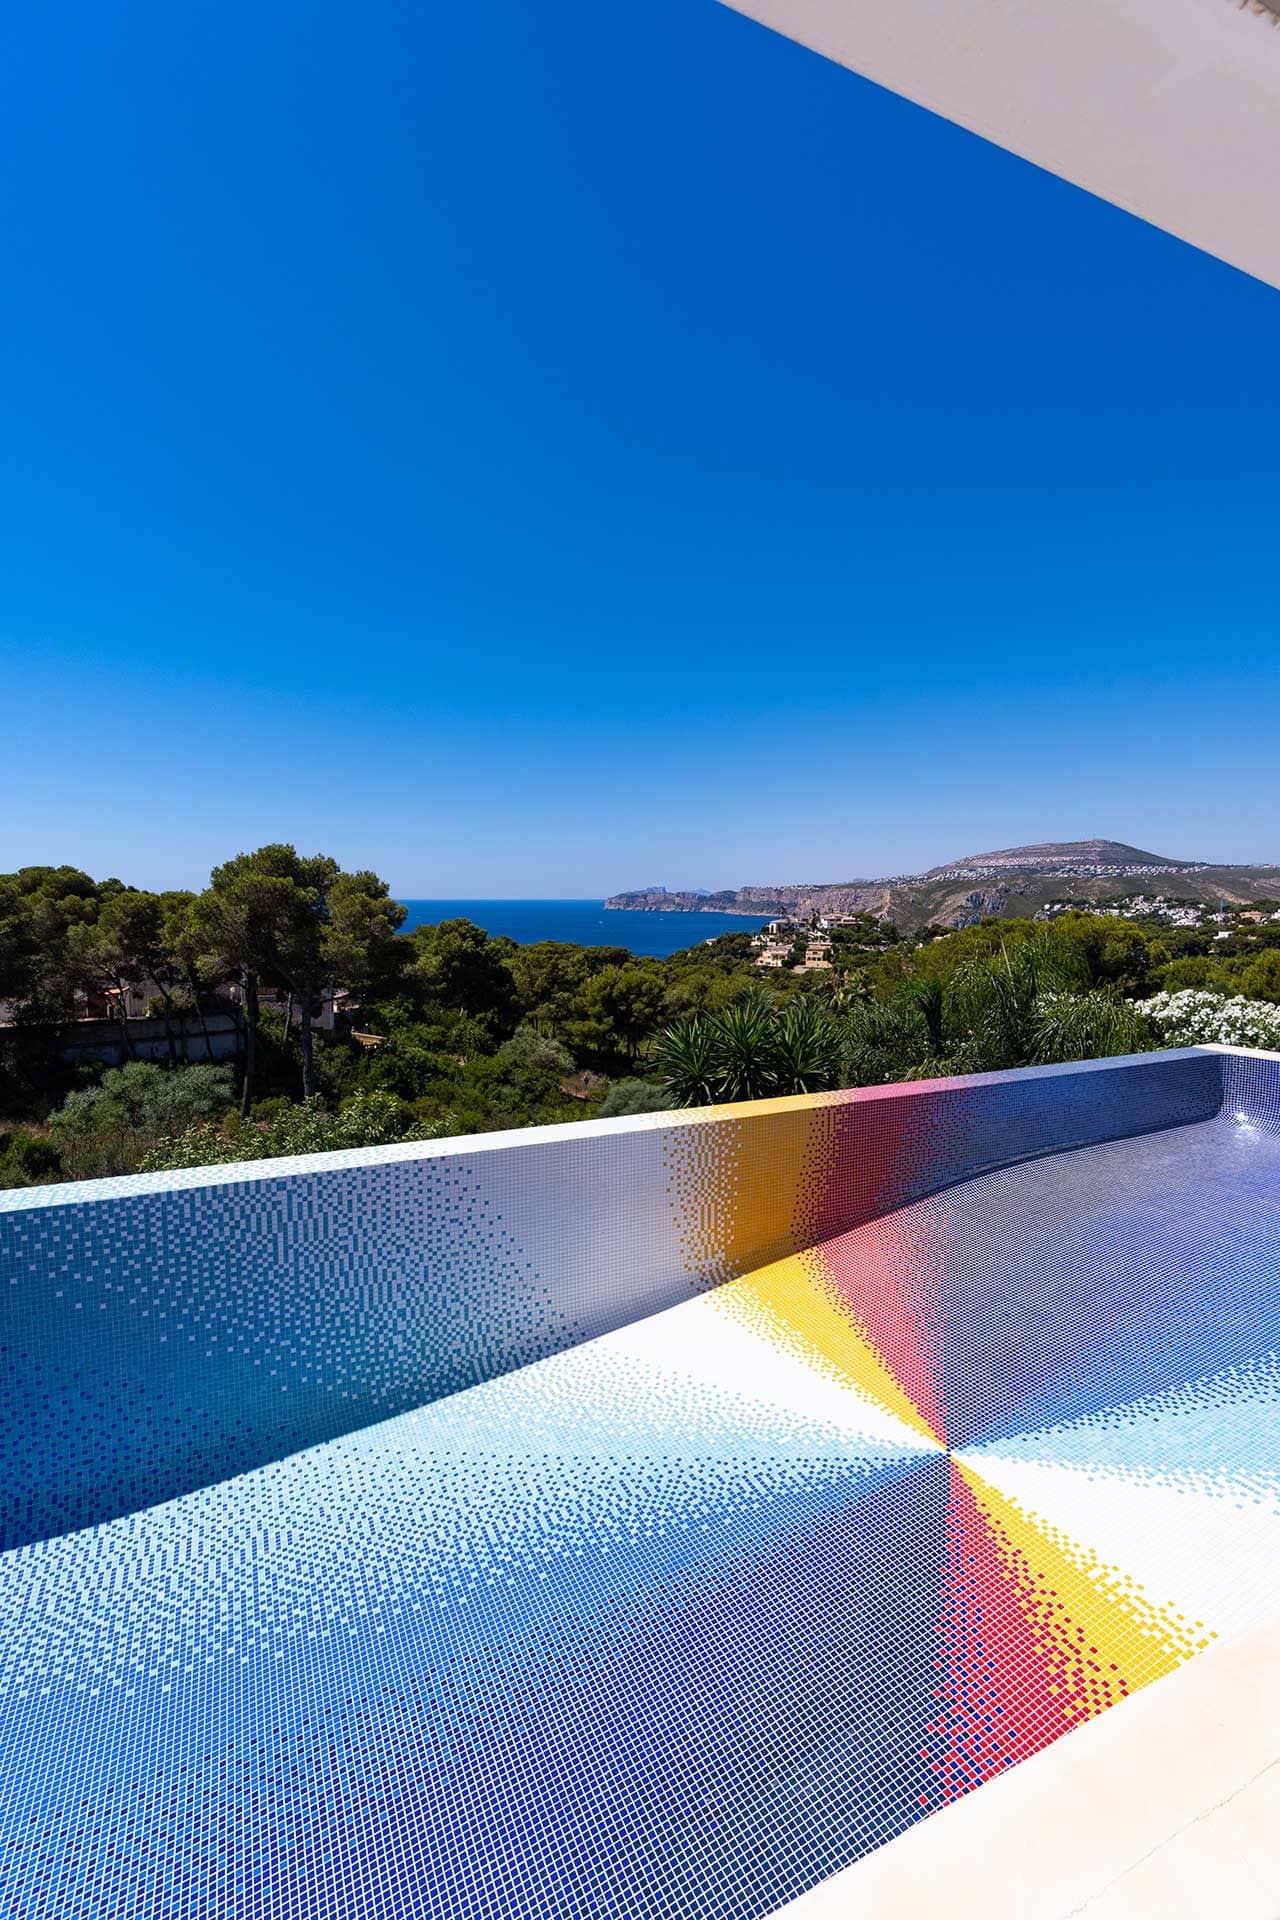 Felipe Pantone's colorful pinwheel pool design in Javea, Spain. 